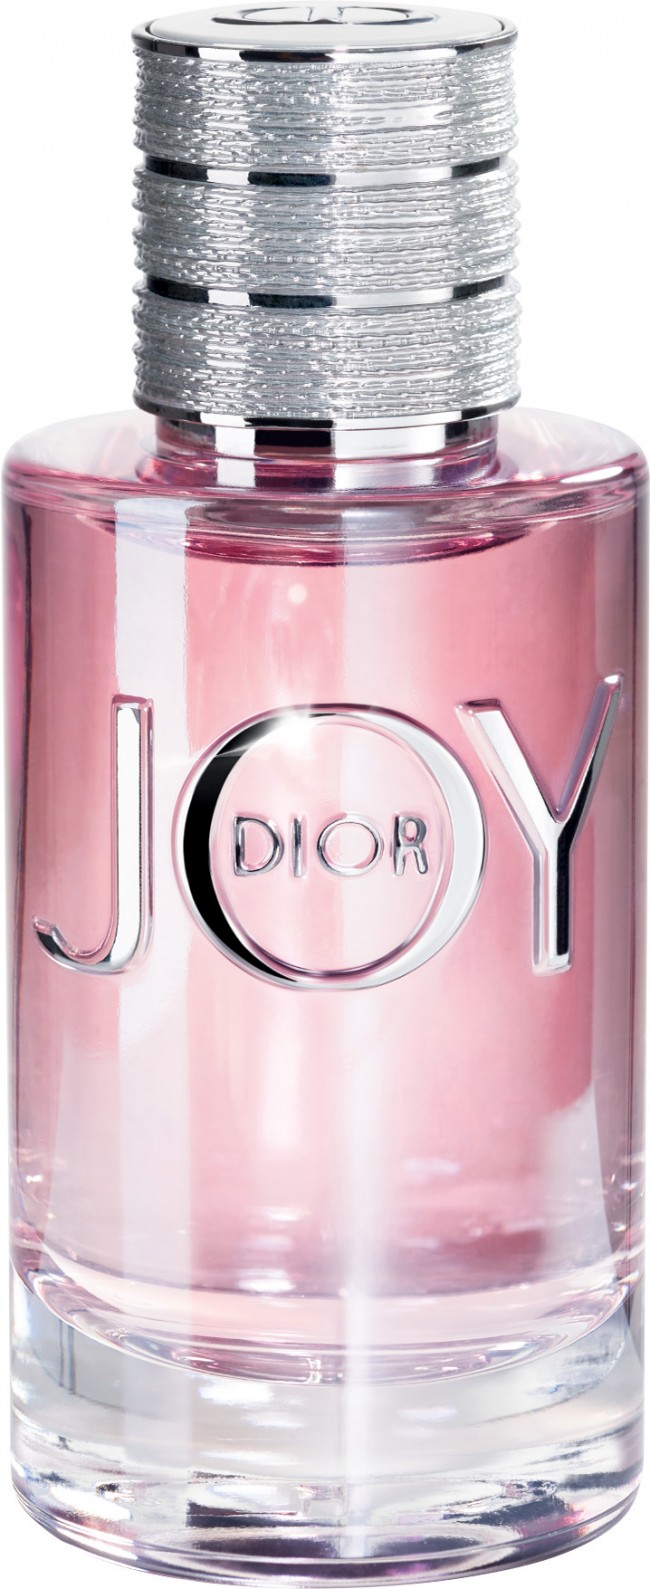 dior joy perfume 90 ml